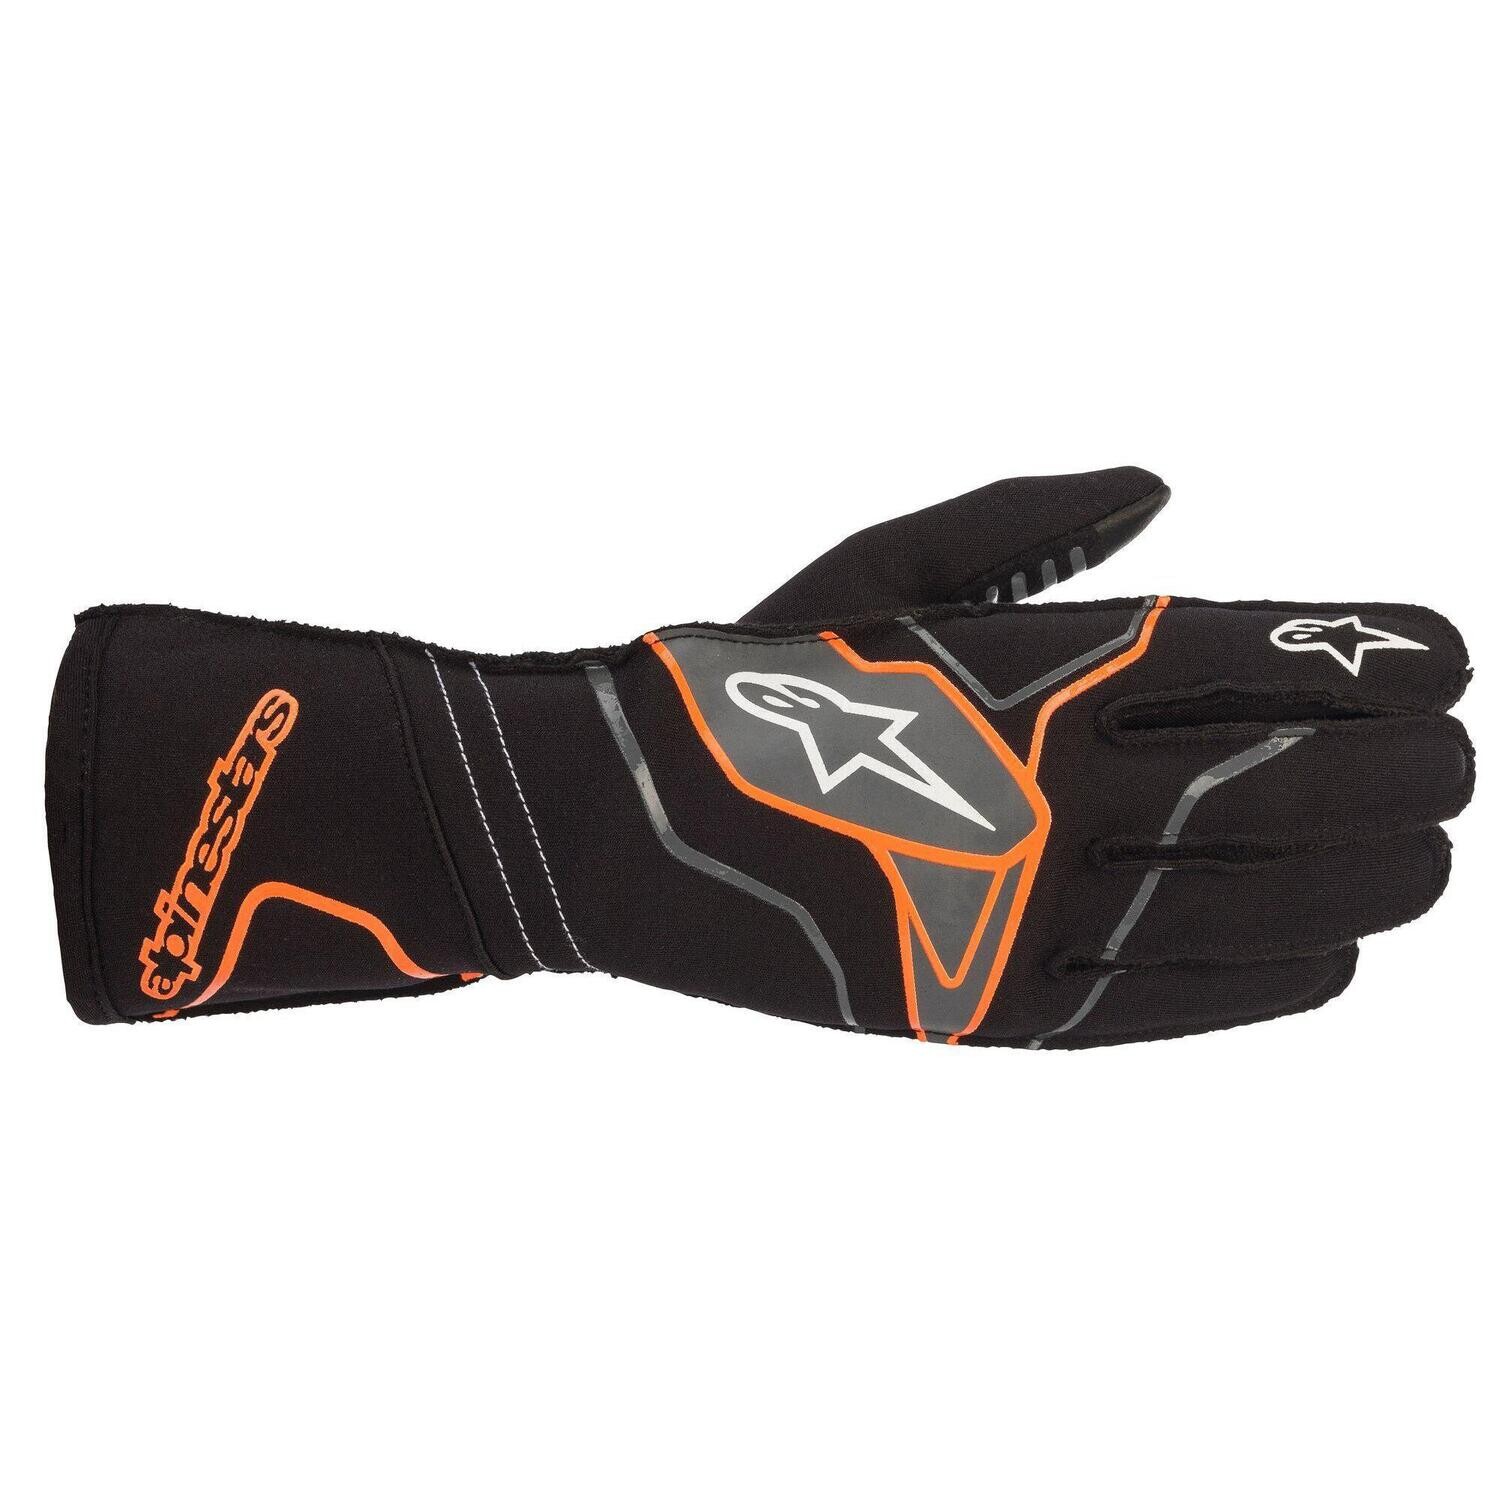 Alpinestars KX V2 Gloves